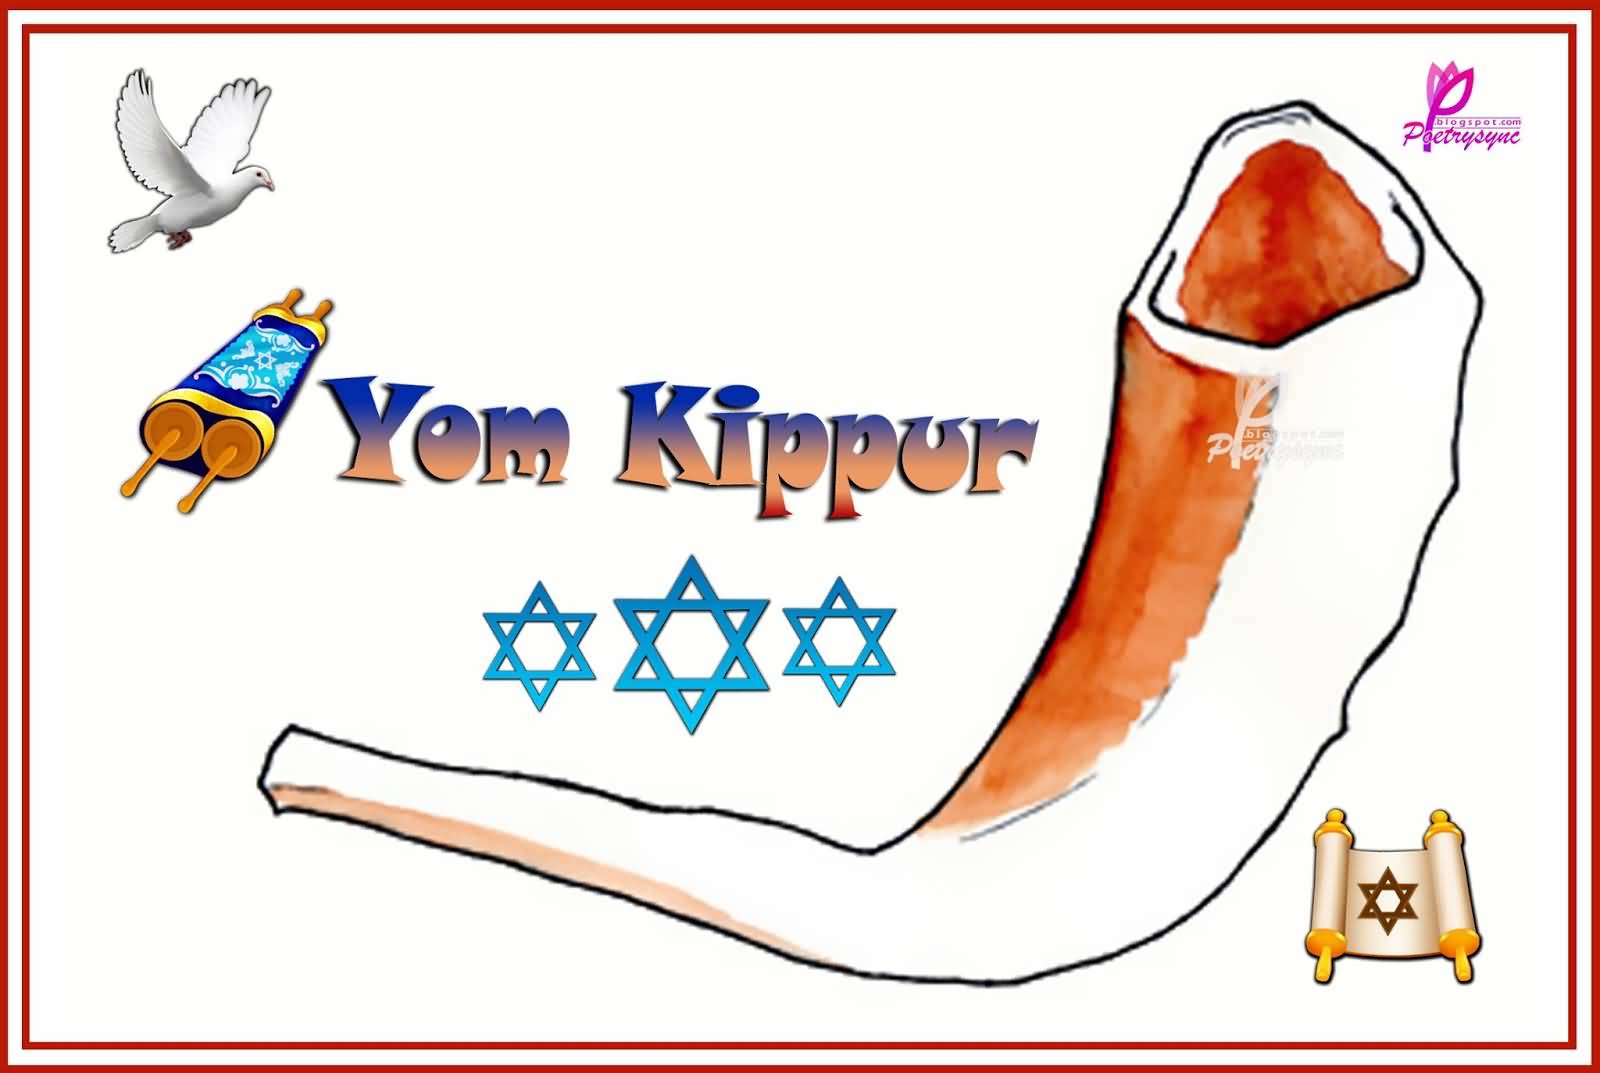 Yom Kippur Greetings Picture For Facebook